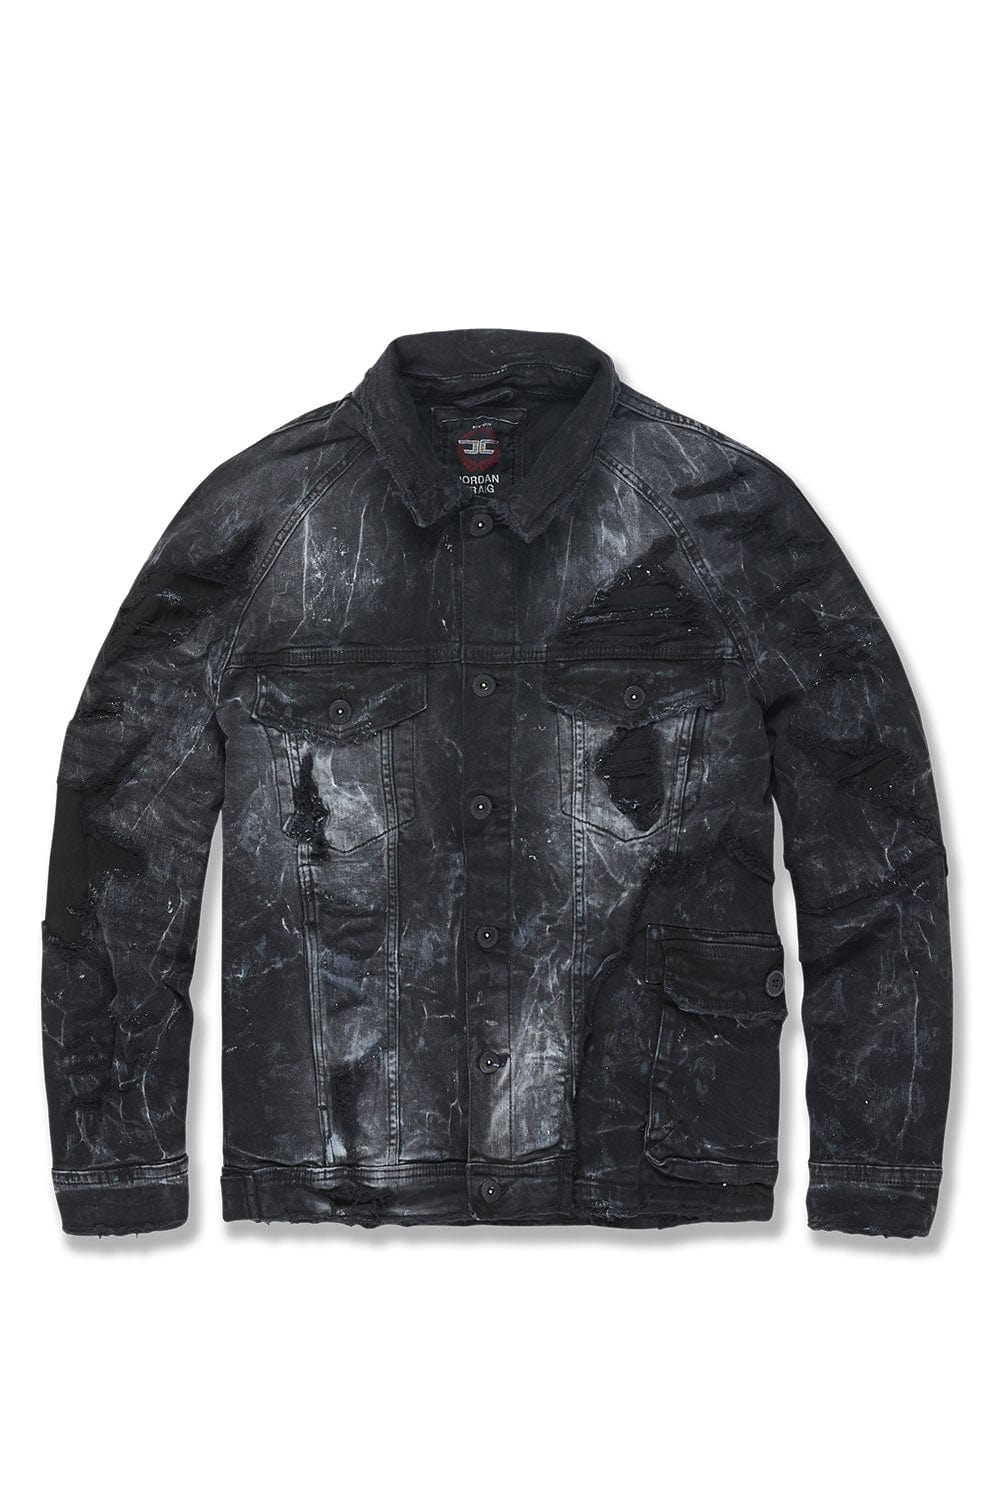 Lane 201 Black Western Denim Jacket - $30 (70% Off Retail) - From